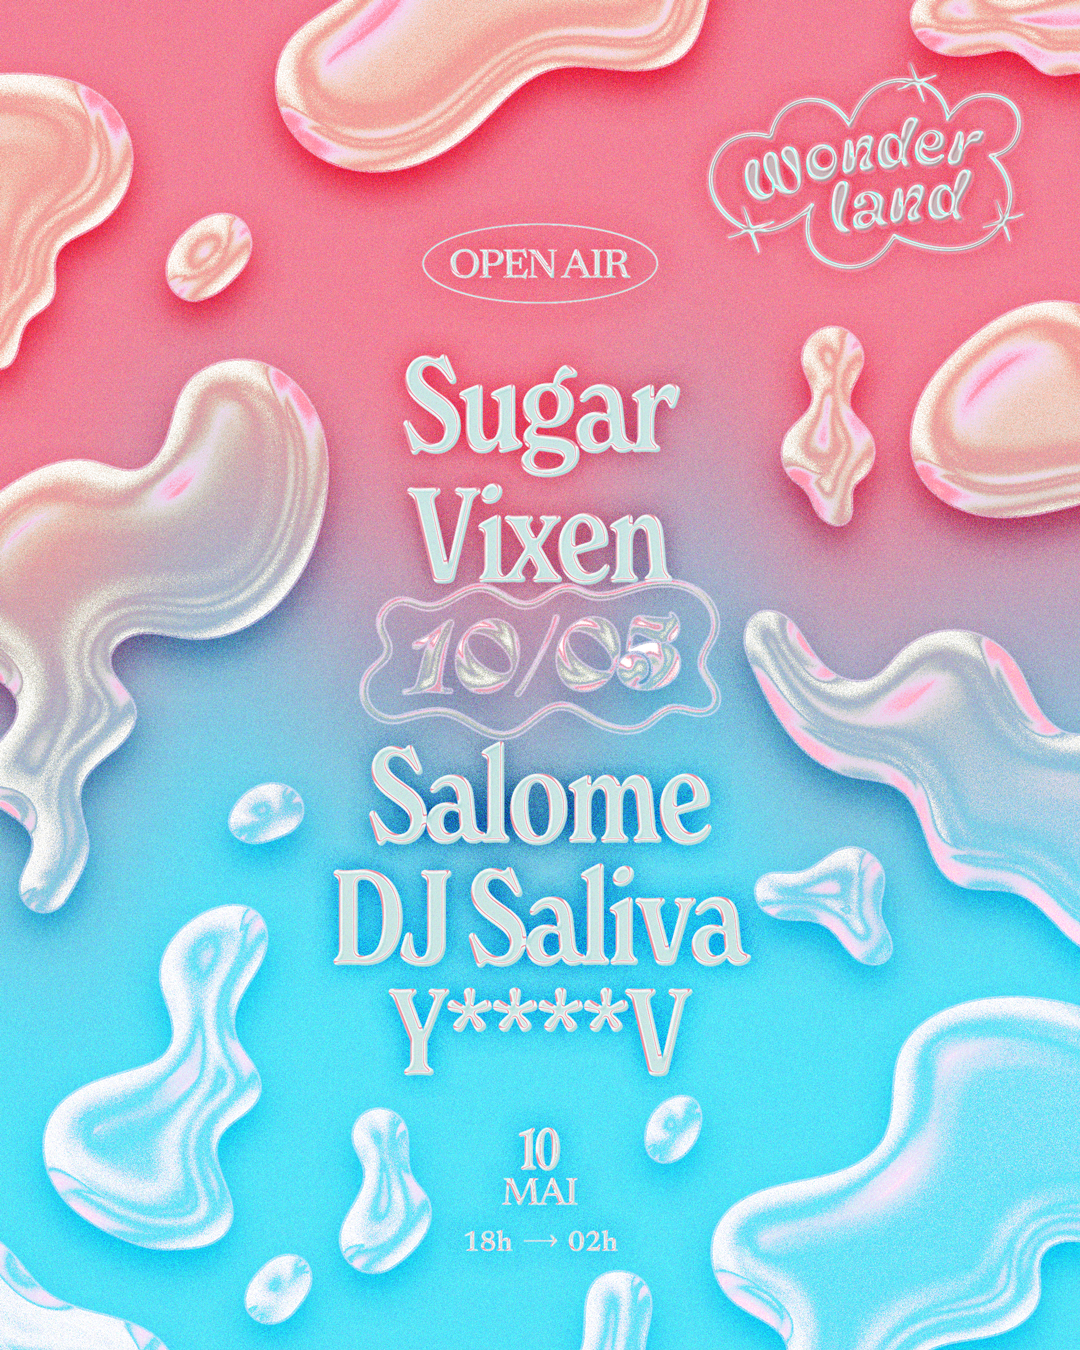 Wonderland invite: Sugar - Vixen - Salome - Dj Saliva - Y****v - フライヤー裏